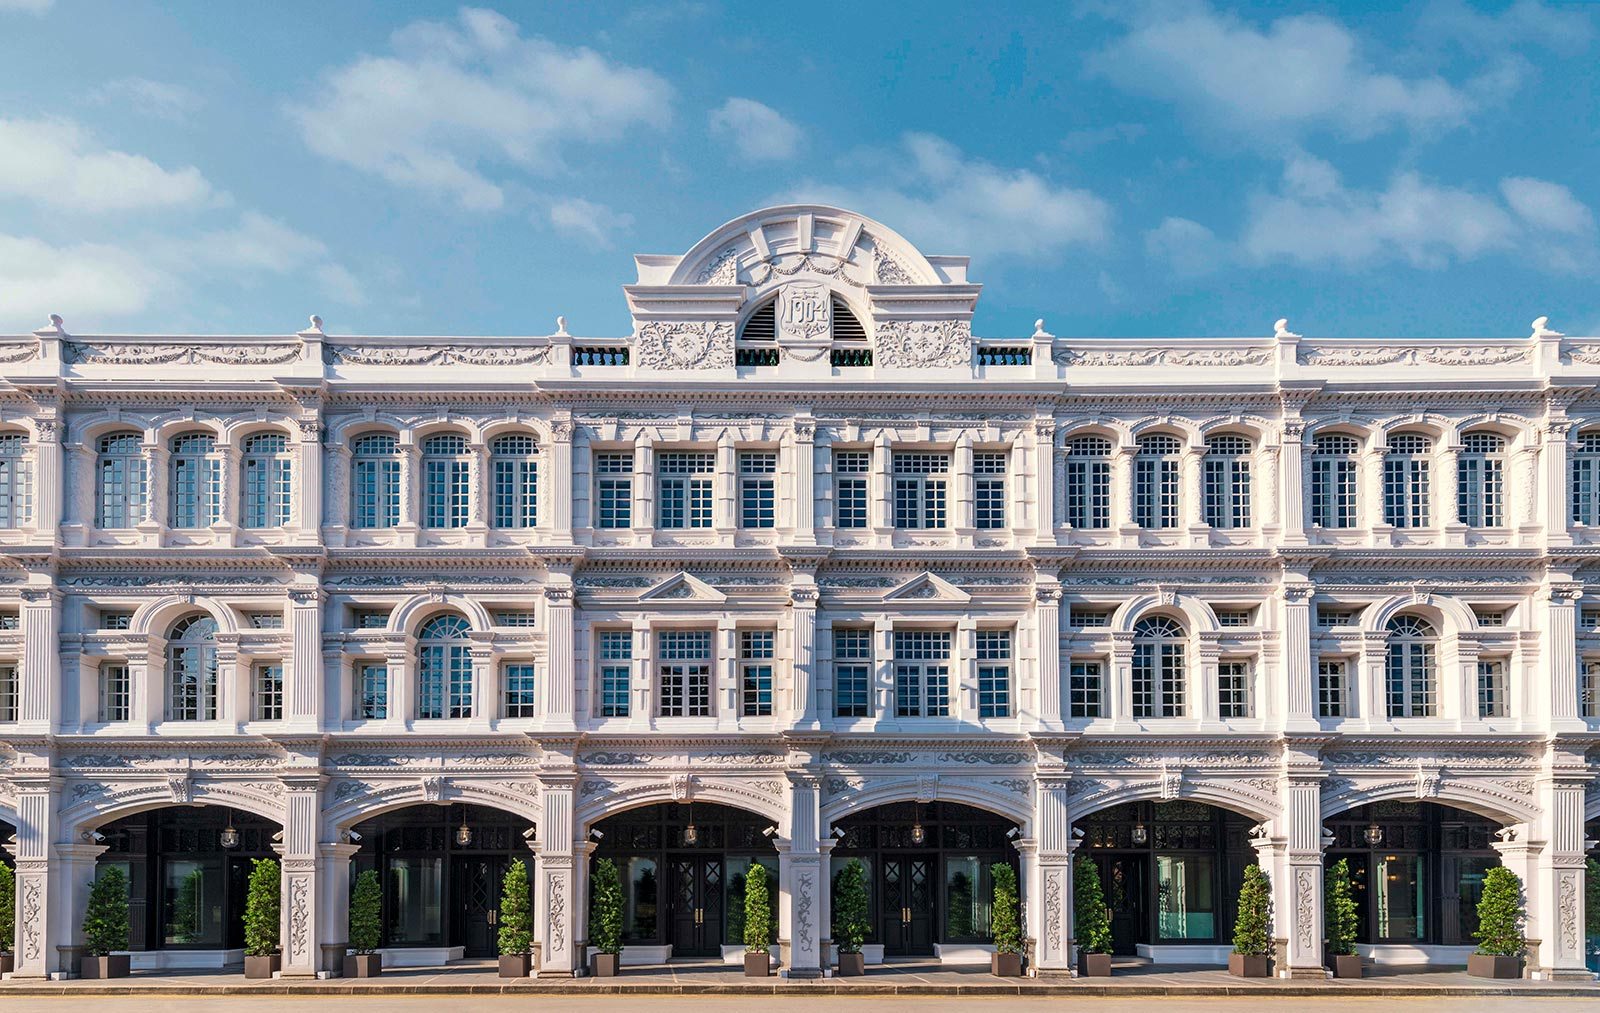 Capitol-Kempinski-Singapore-hotels-Stamford-House-Facade